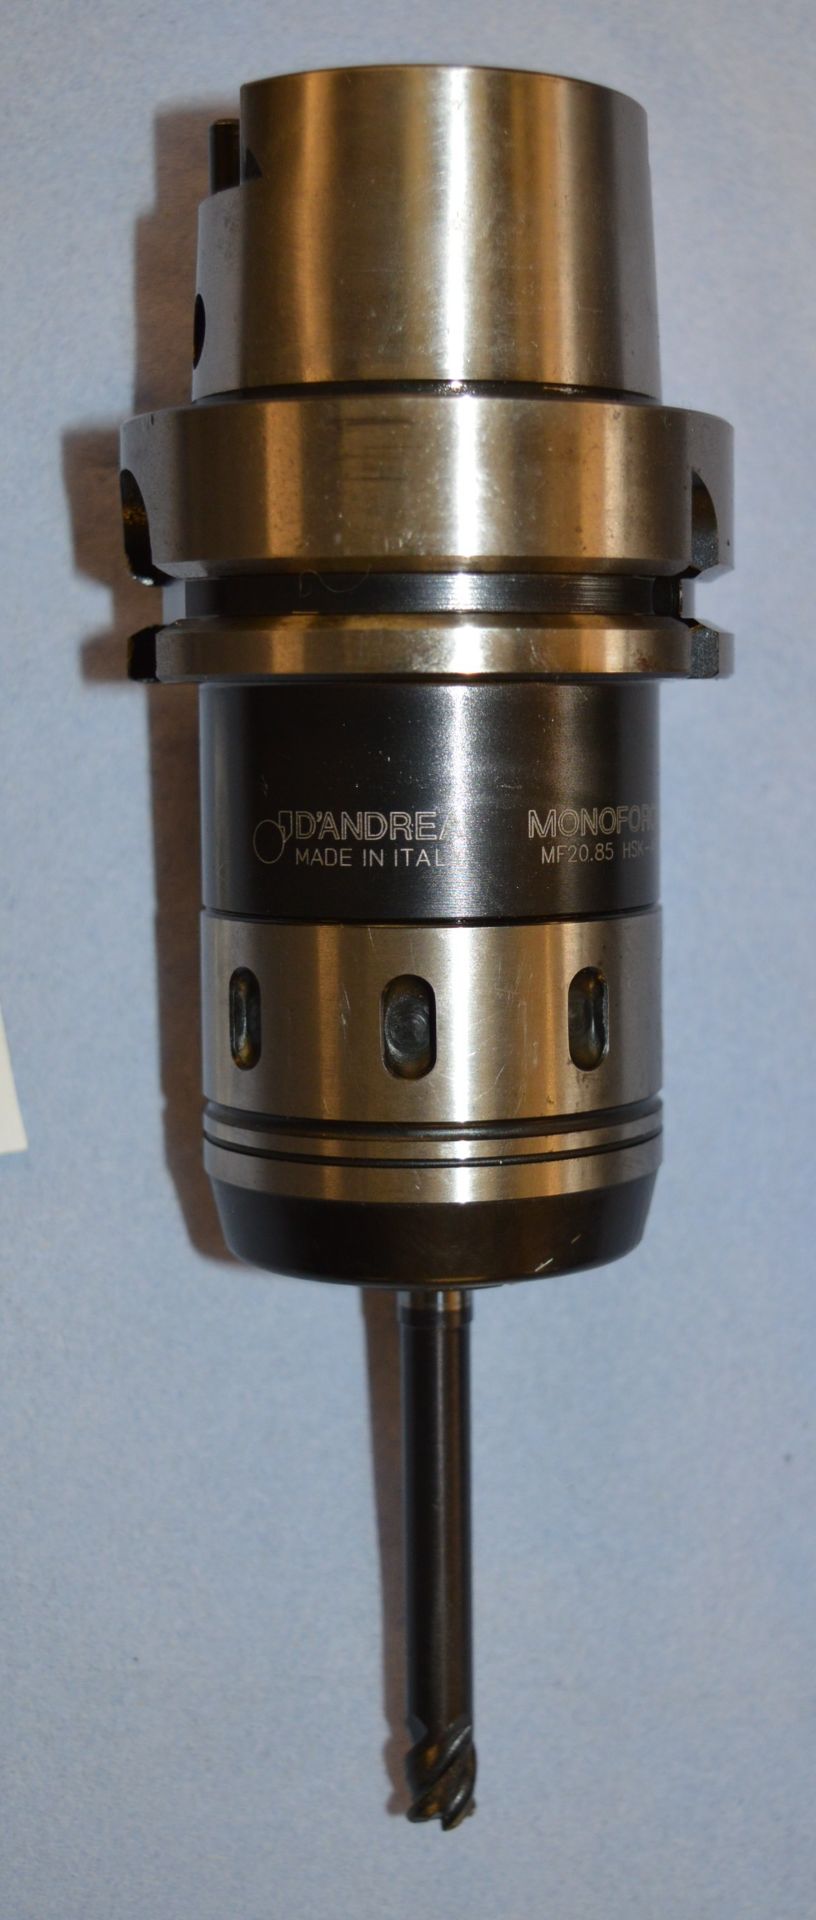 1 x d'andrea Monoforce MF20.85 Milling Chuck With Nikken KM20-8 Collet - CL011 - Ref EN305 - - Image 2 of 6